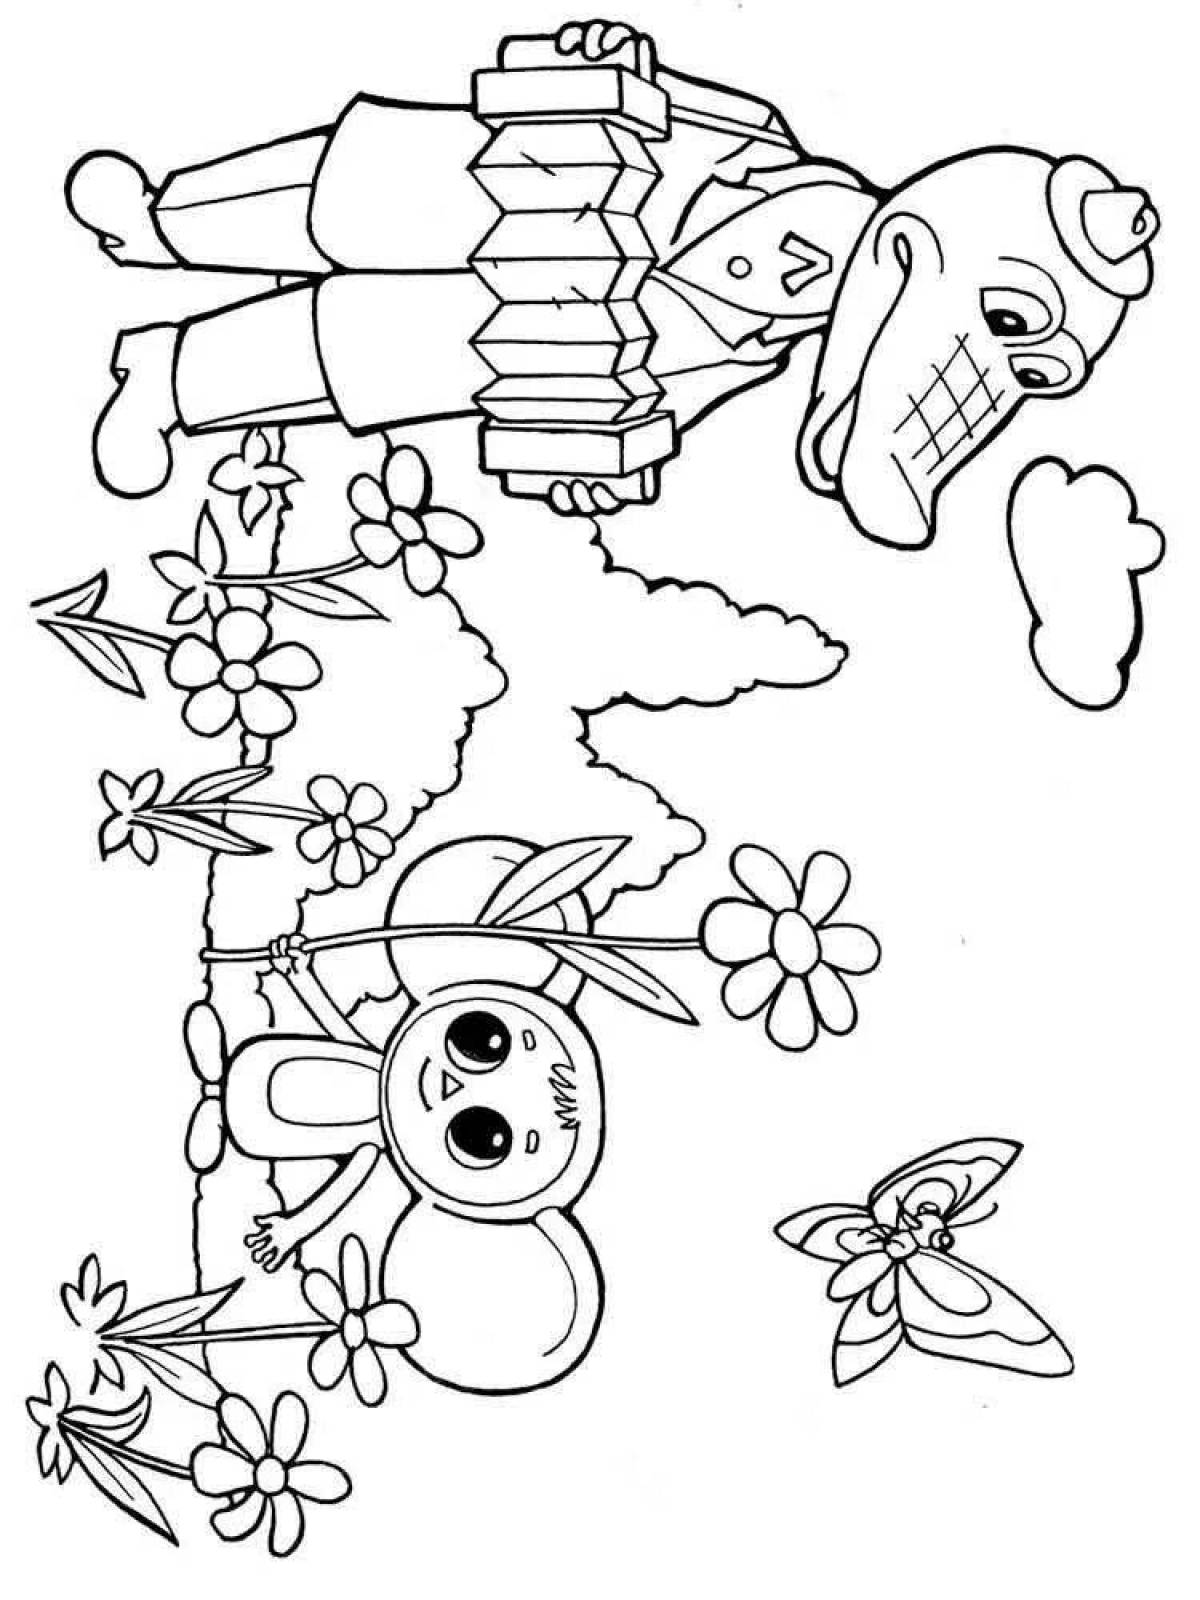 Interesting Cheburashka coloring book for children 5-6 years old